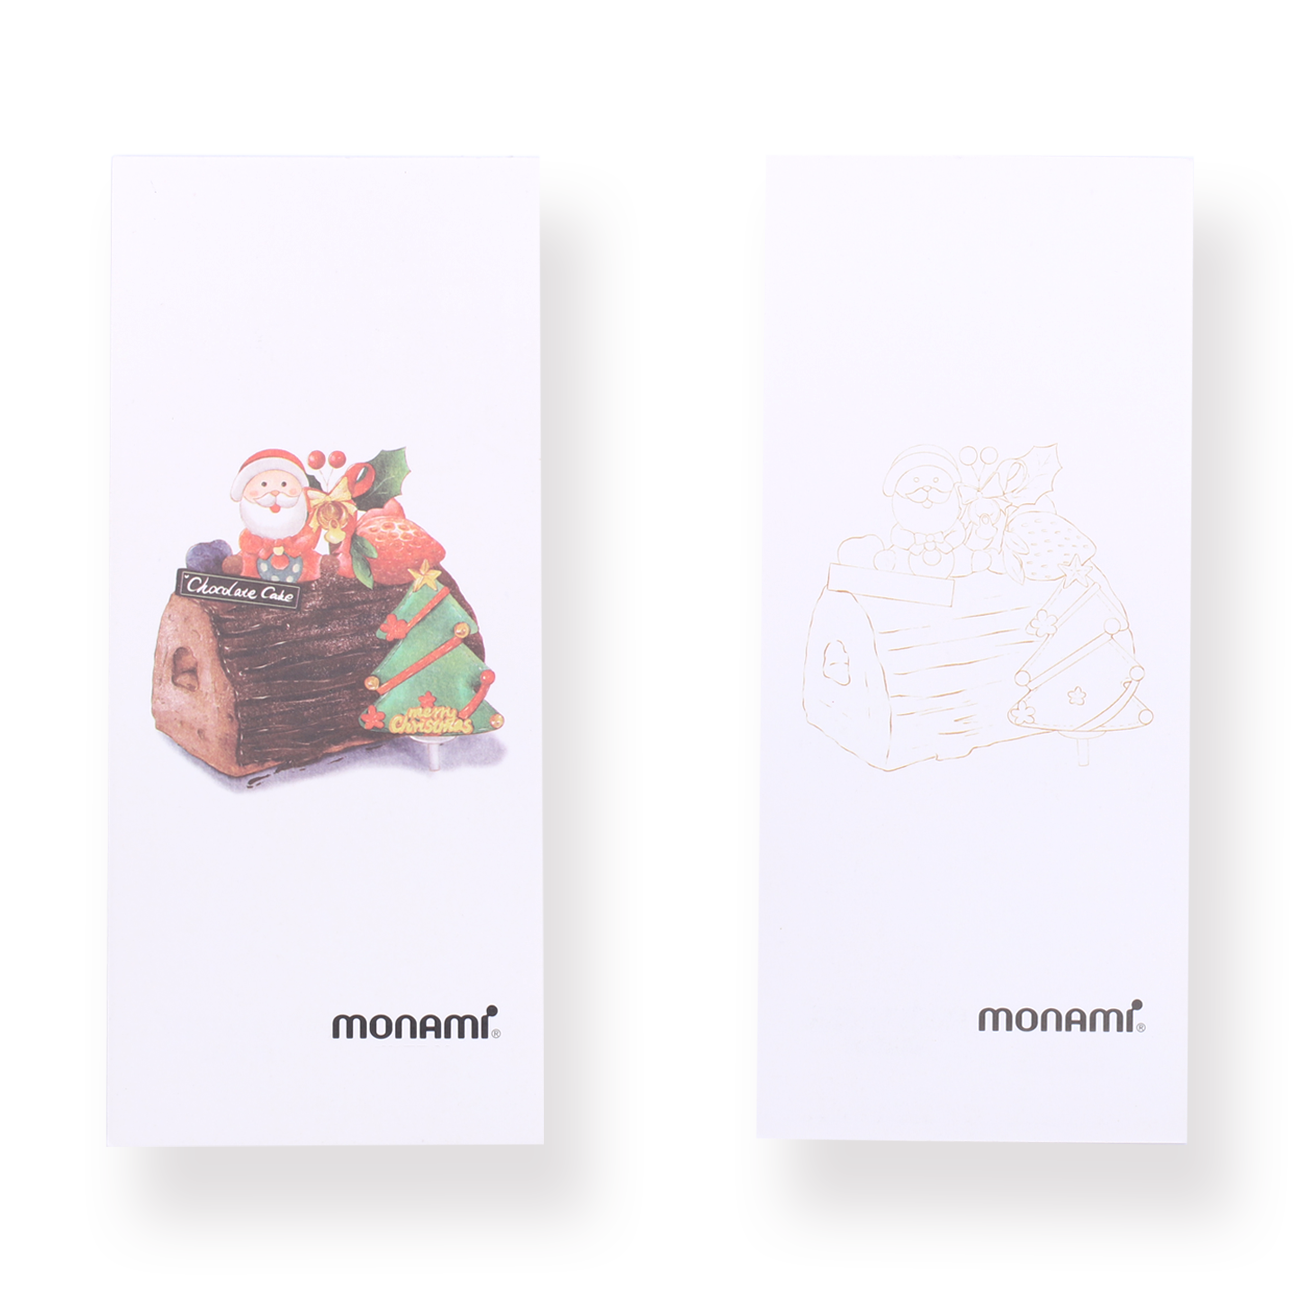 Monami Plus Pen 3000  - 36 Colors Set - Box Set - Stationery Pal